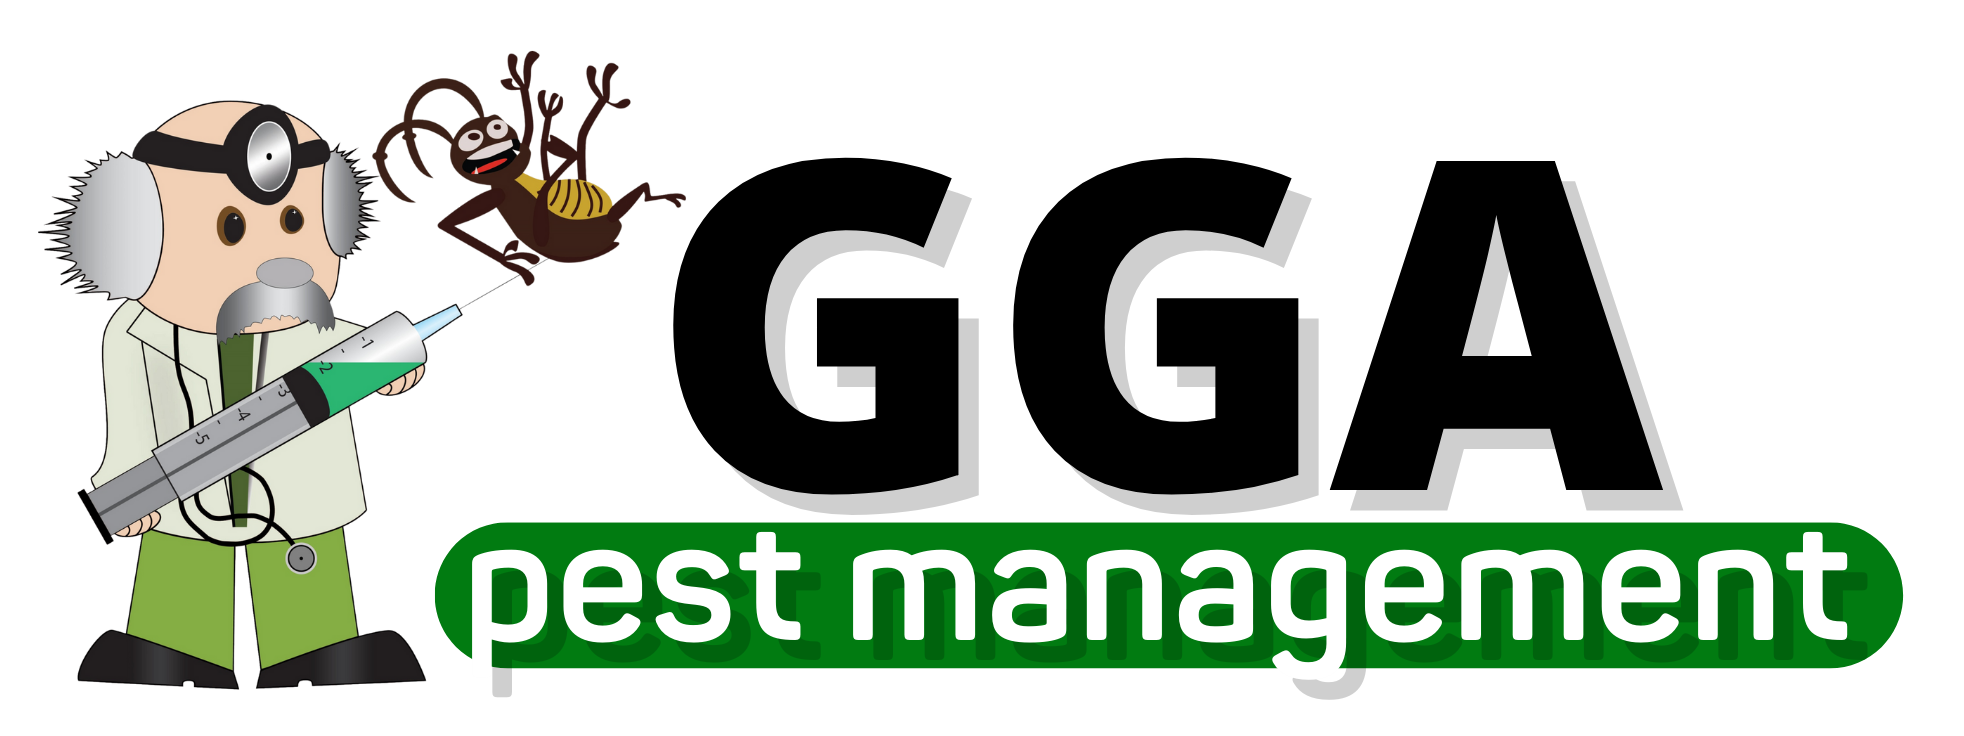 gga pest management logo_website